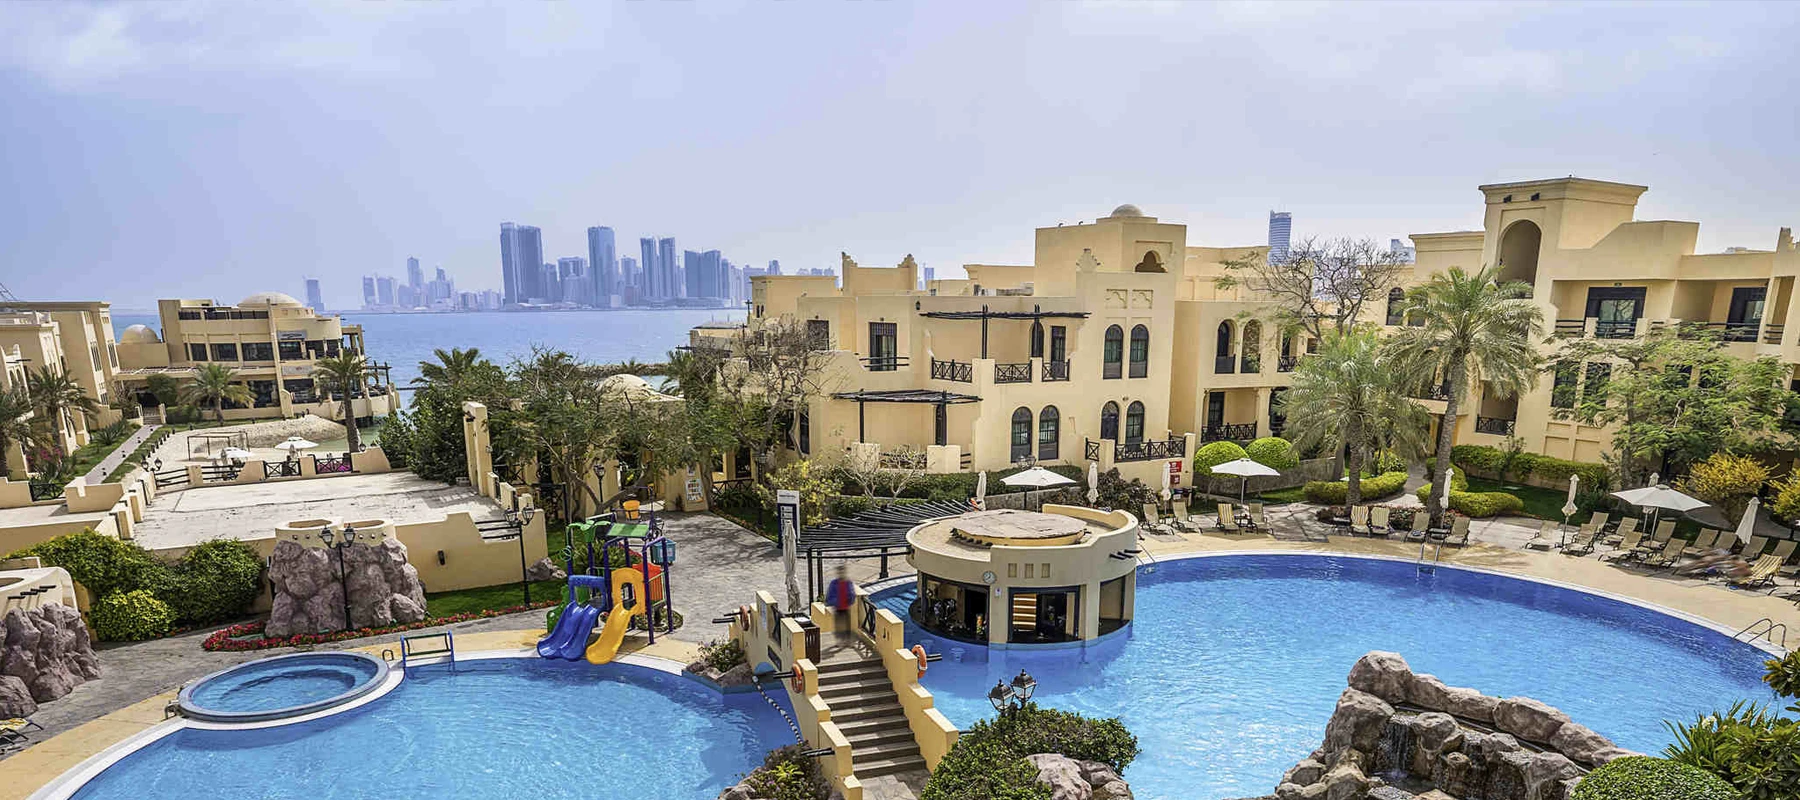 Featured image for “Novotel Bahrain Al Dana Resort”